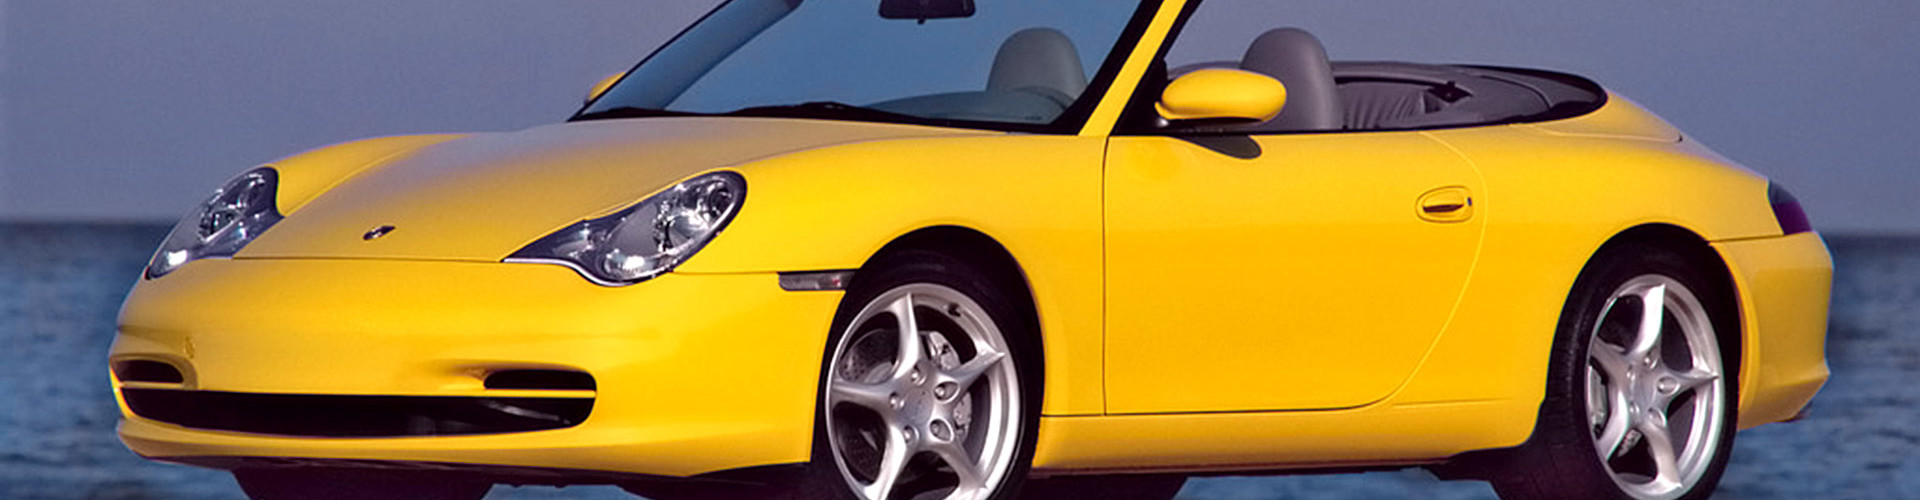 USed Car Buyers Guide - Porsche 911 996 Carrera